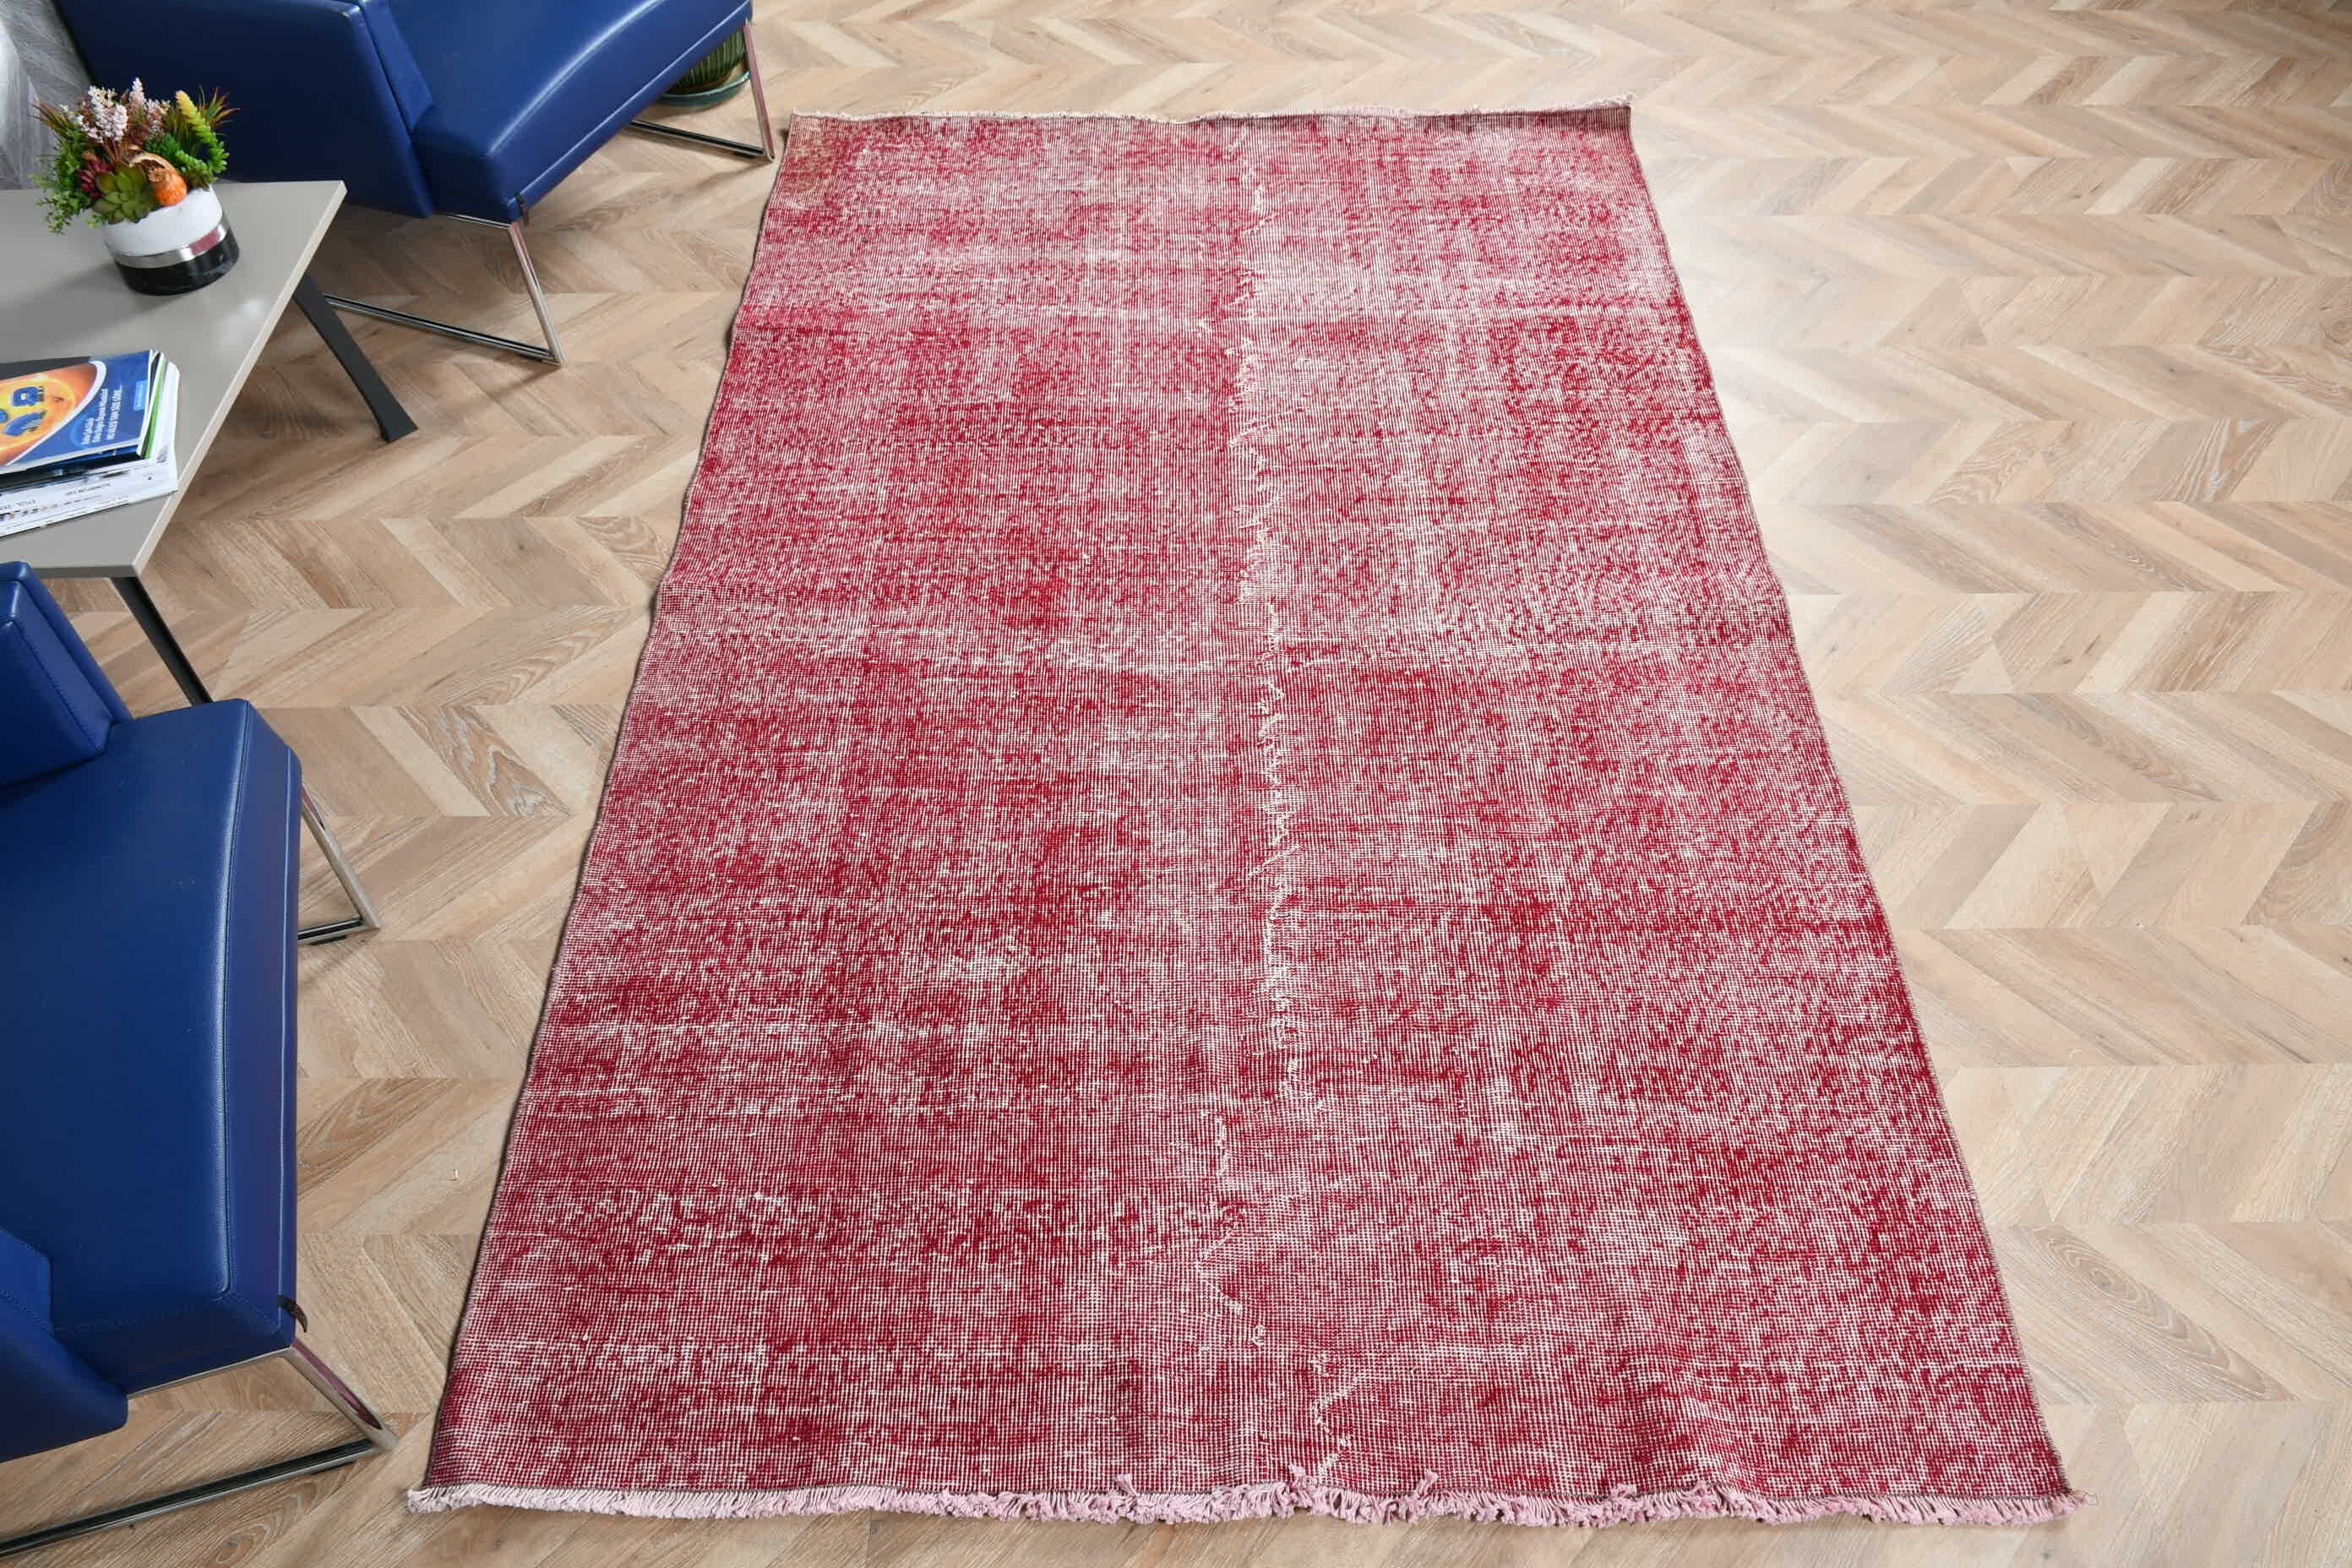 Turkish Rugs, Vintage Rug, Rugs for Dining Room, Red Oriental Rug, Dining Room Rug, Bedroom Rug, Home Decor Rug, 5.1x8.2 ft Large Rug